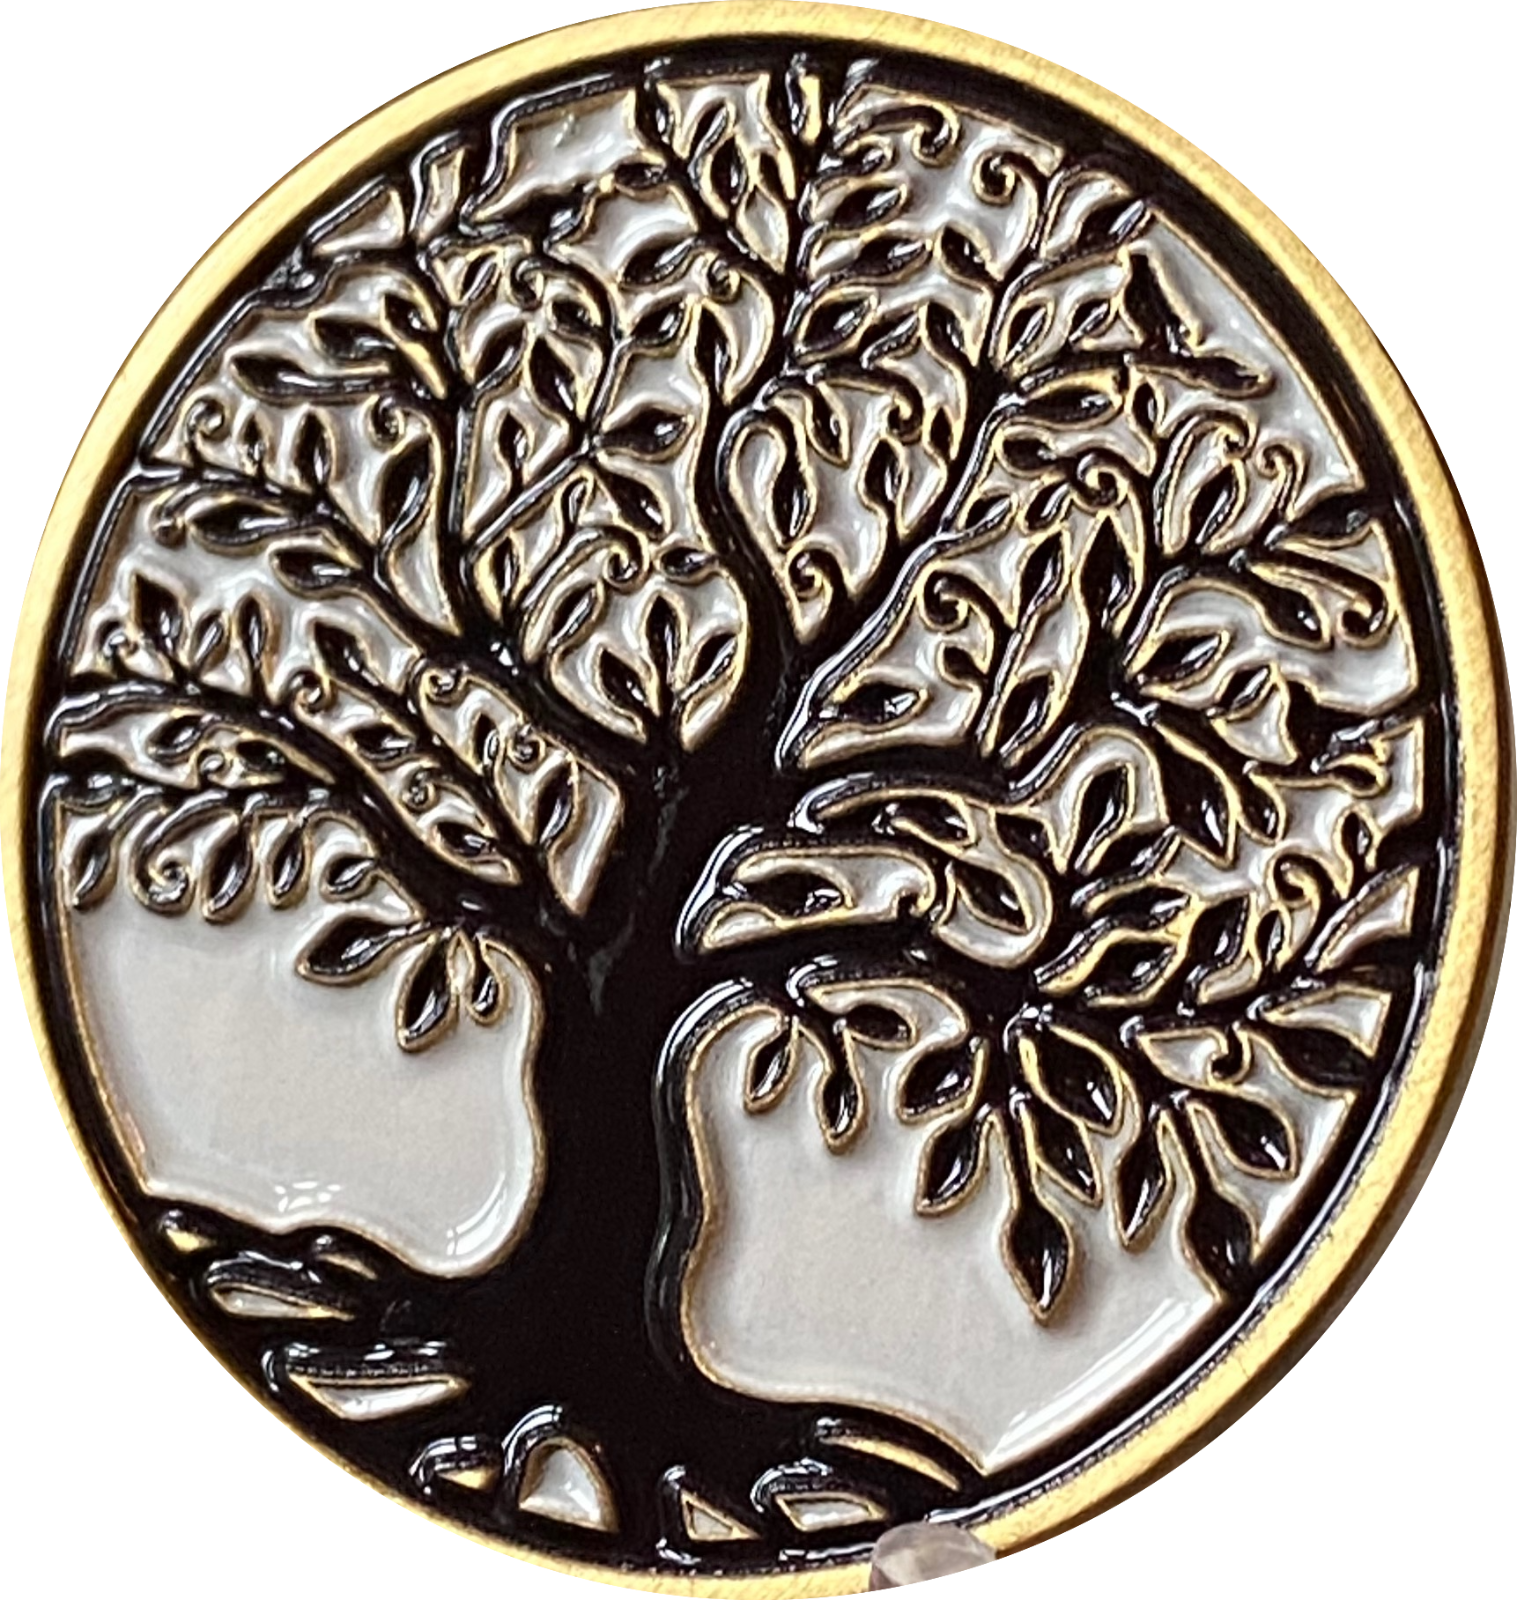 Sakura Cherry Tree Of Life White on Black Serenity Prayer Medallion Coin Chip